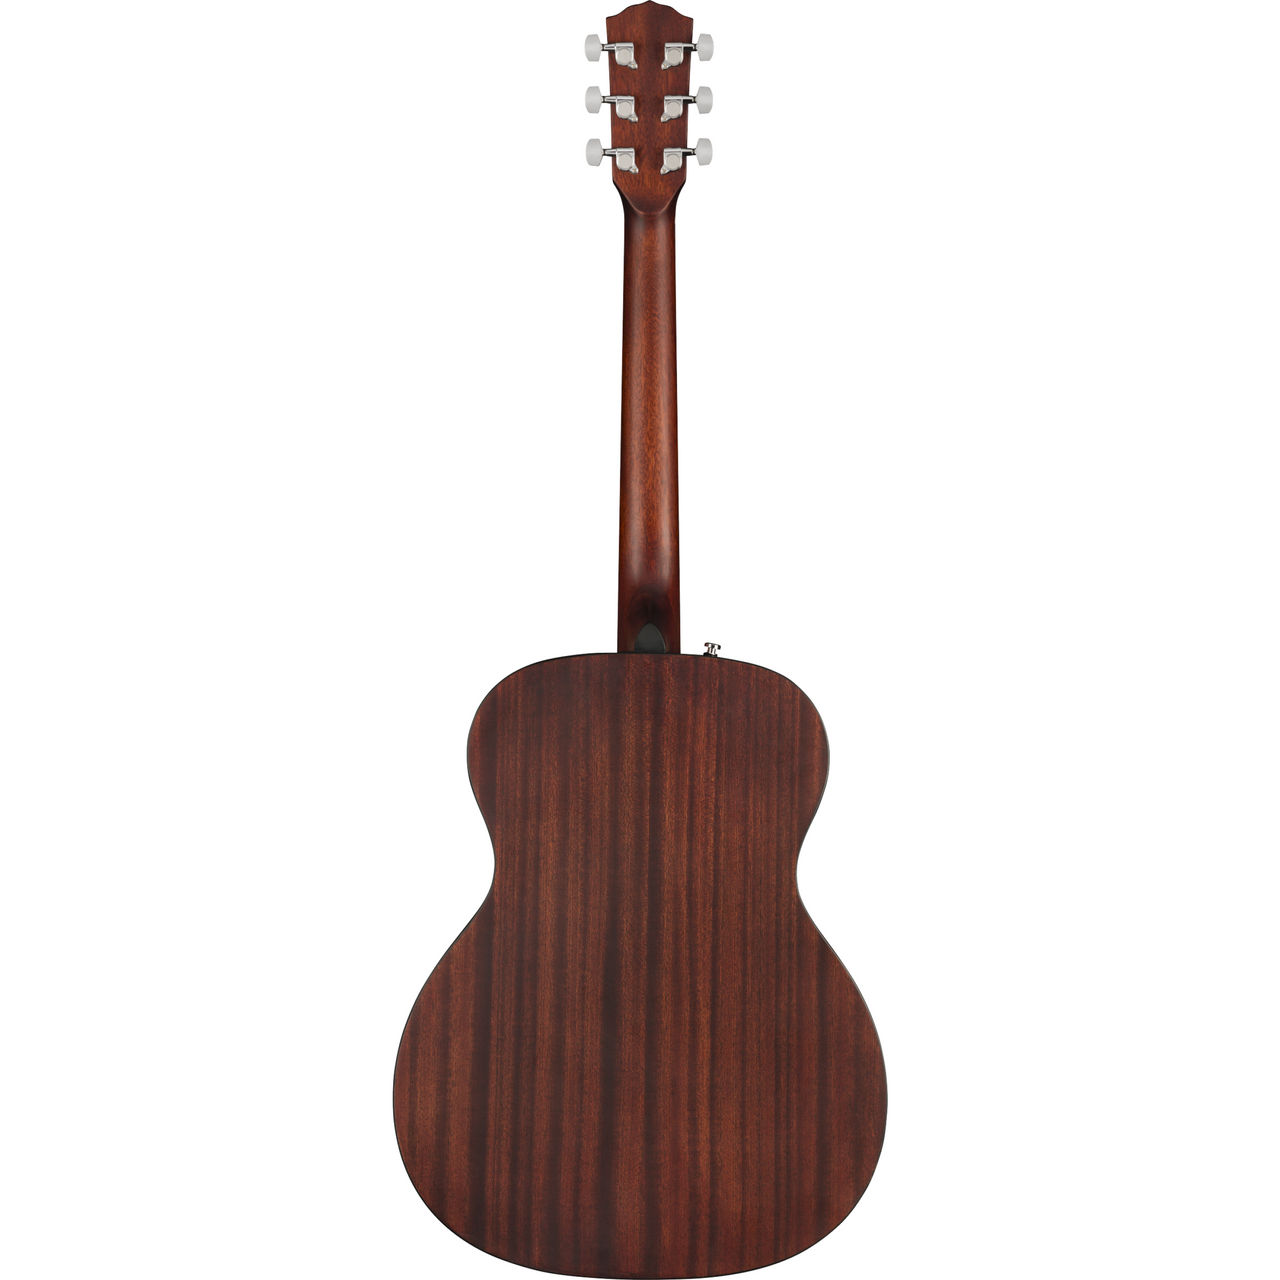 Paquete Guitarra Acustica Fender Cc-60s V2 All Mah Wn, 0970150422